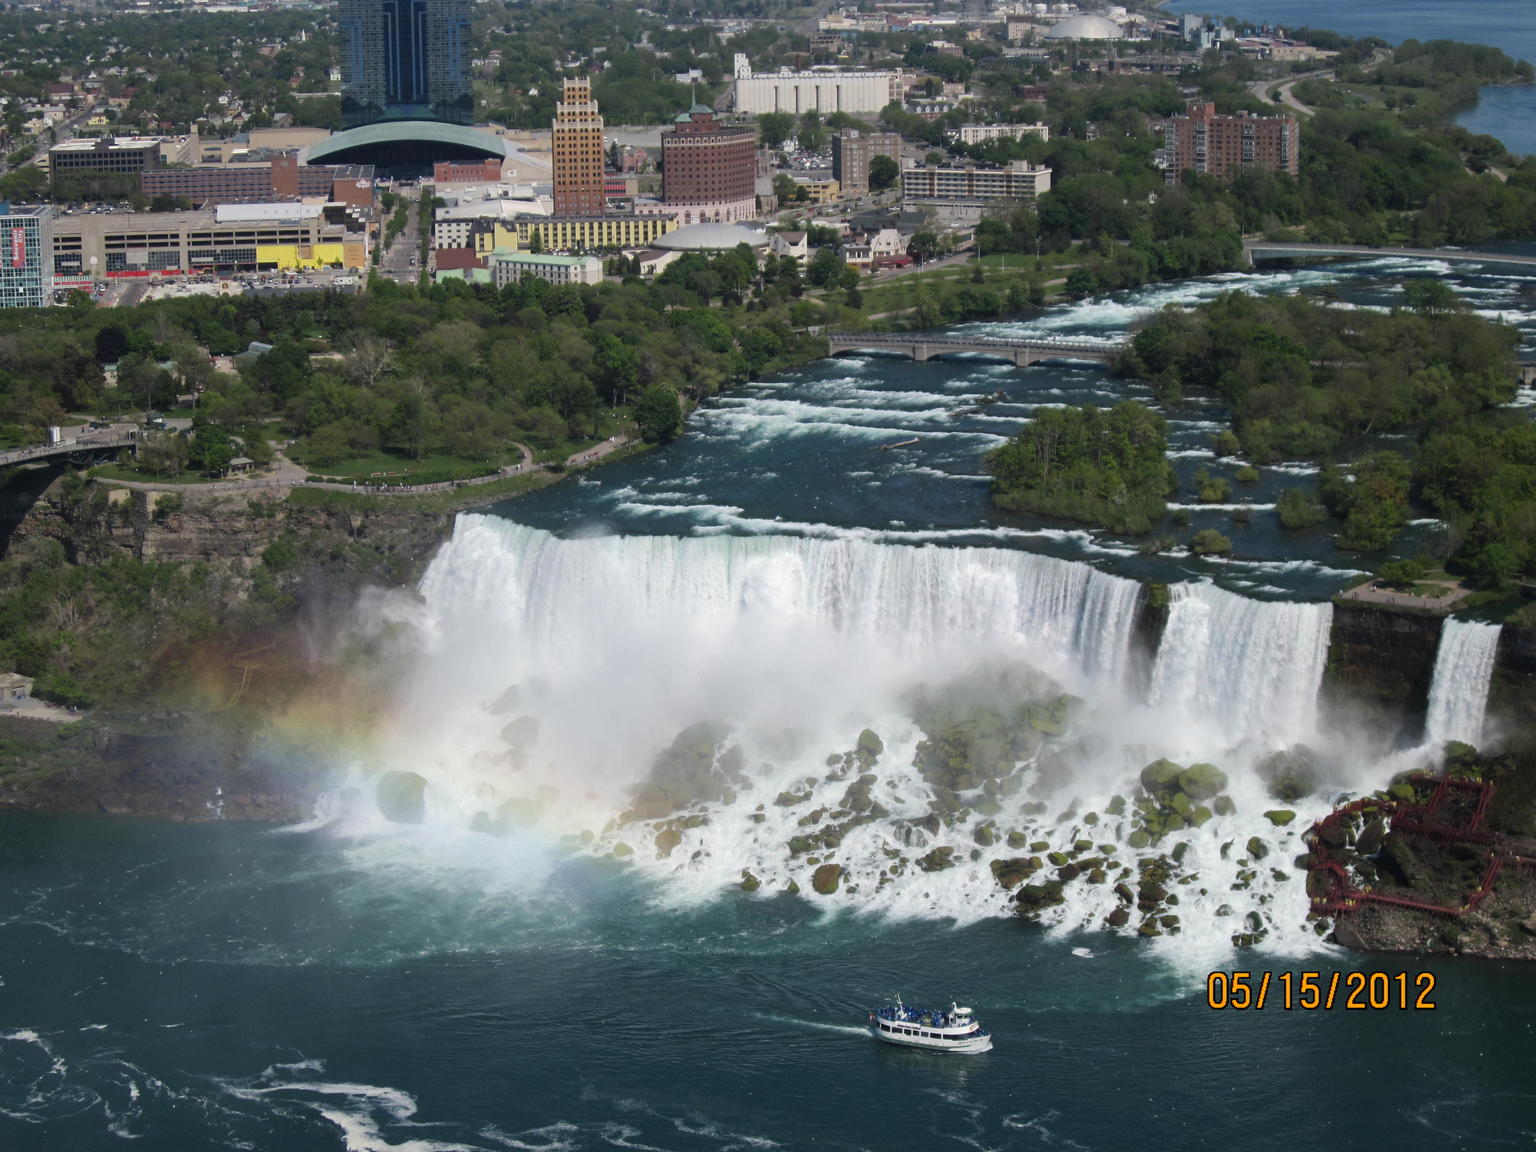 The American Falls and Bridal Falls